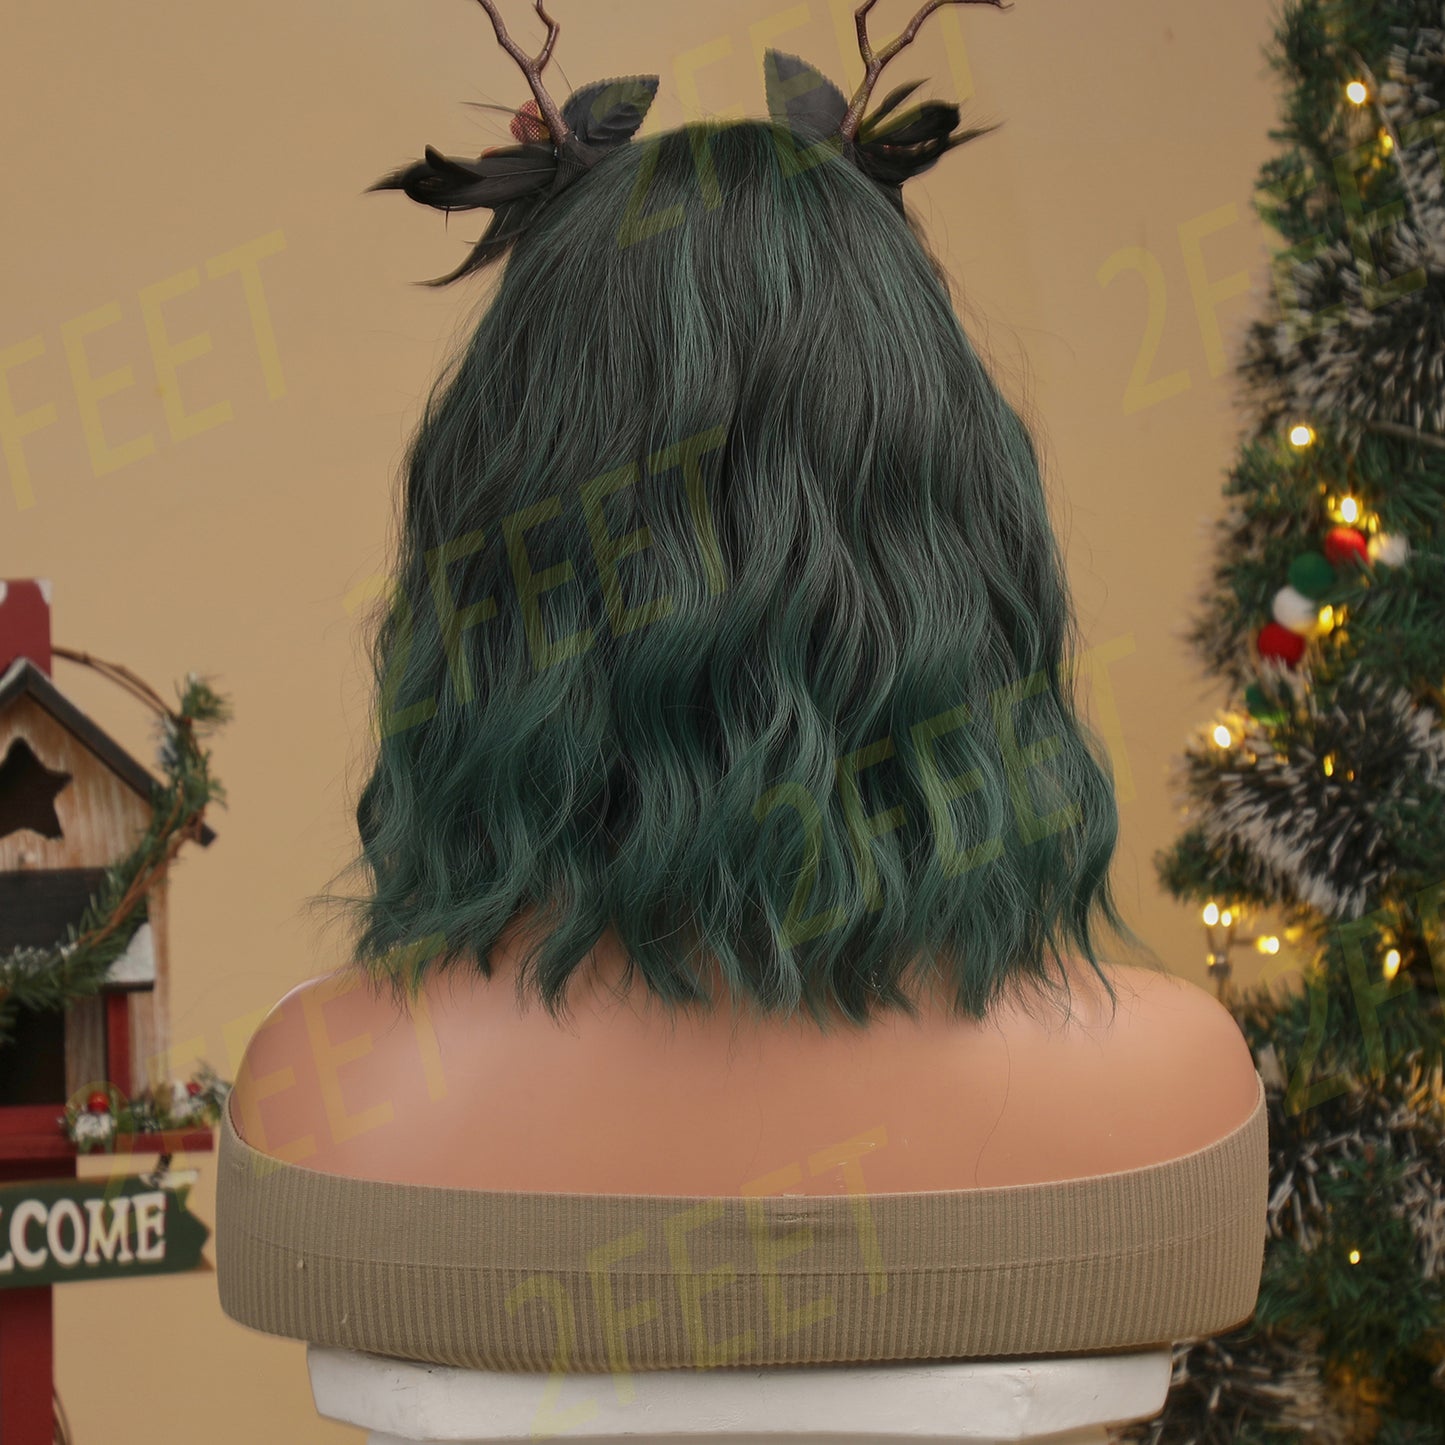 NO.28 2Feet-short curly dark green hair